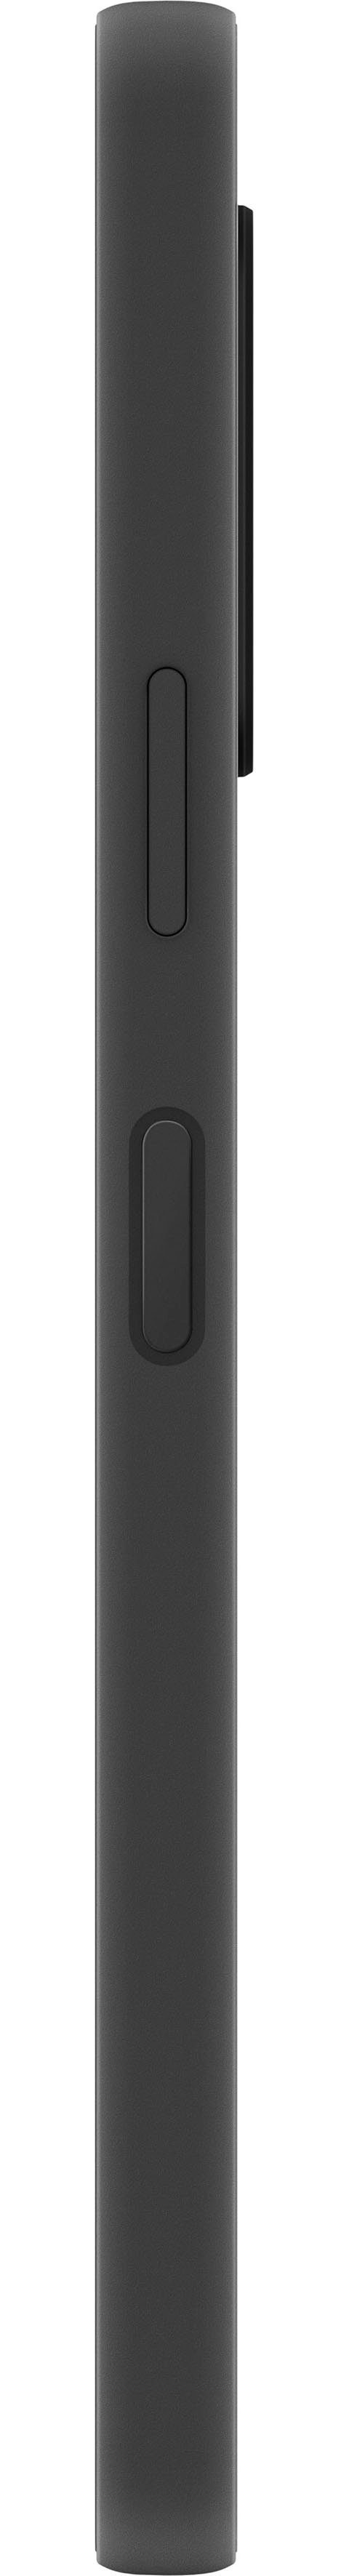 Sony XPERIA 128 48 Smartphone GB Gojischwarz 10V Speicherplatz, Zoll, Kamera) (15,5 cm/6,1 MP